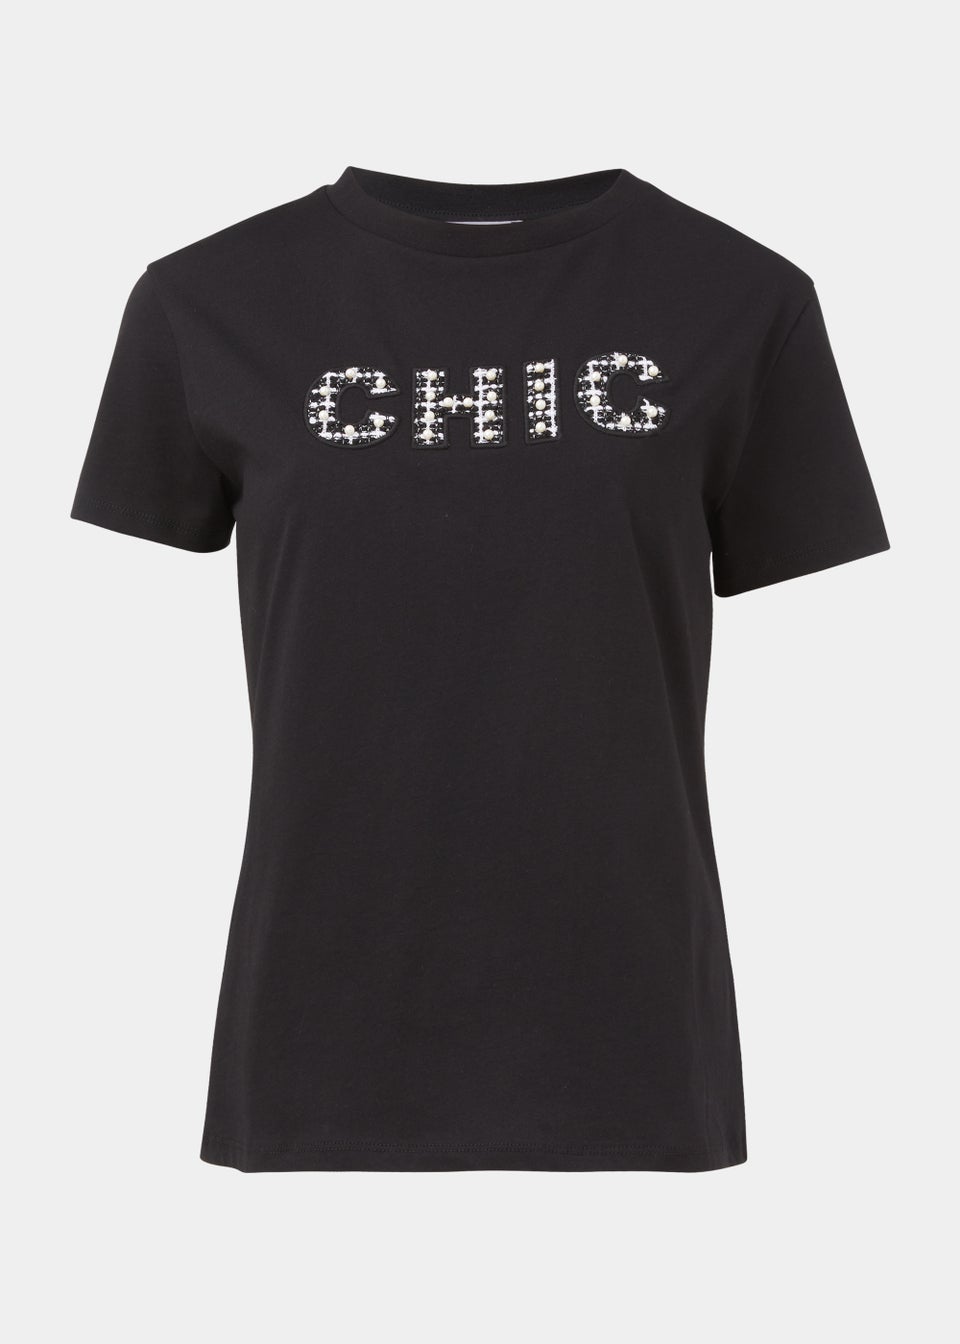 Black Chic Slogan T-Shirt - Matalan